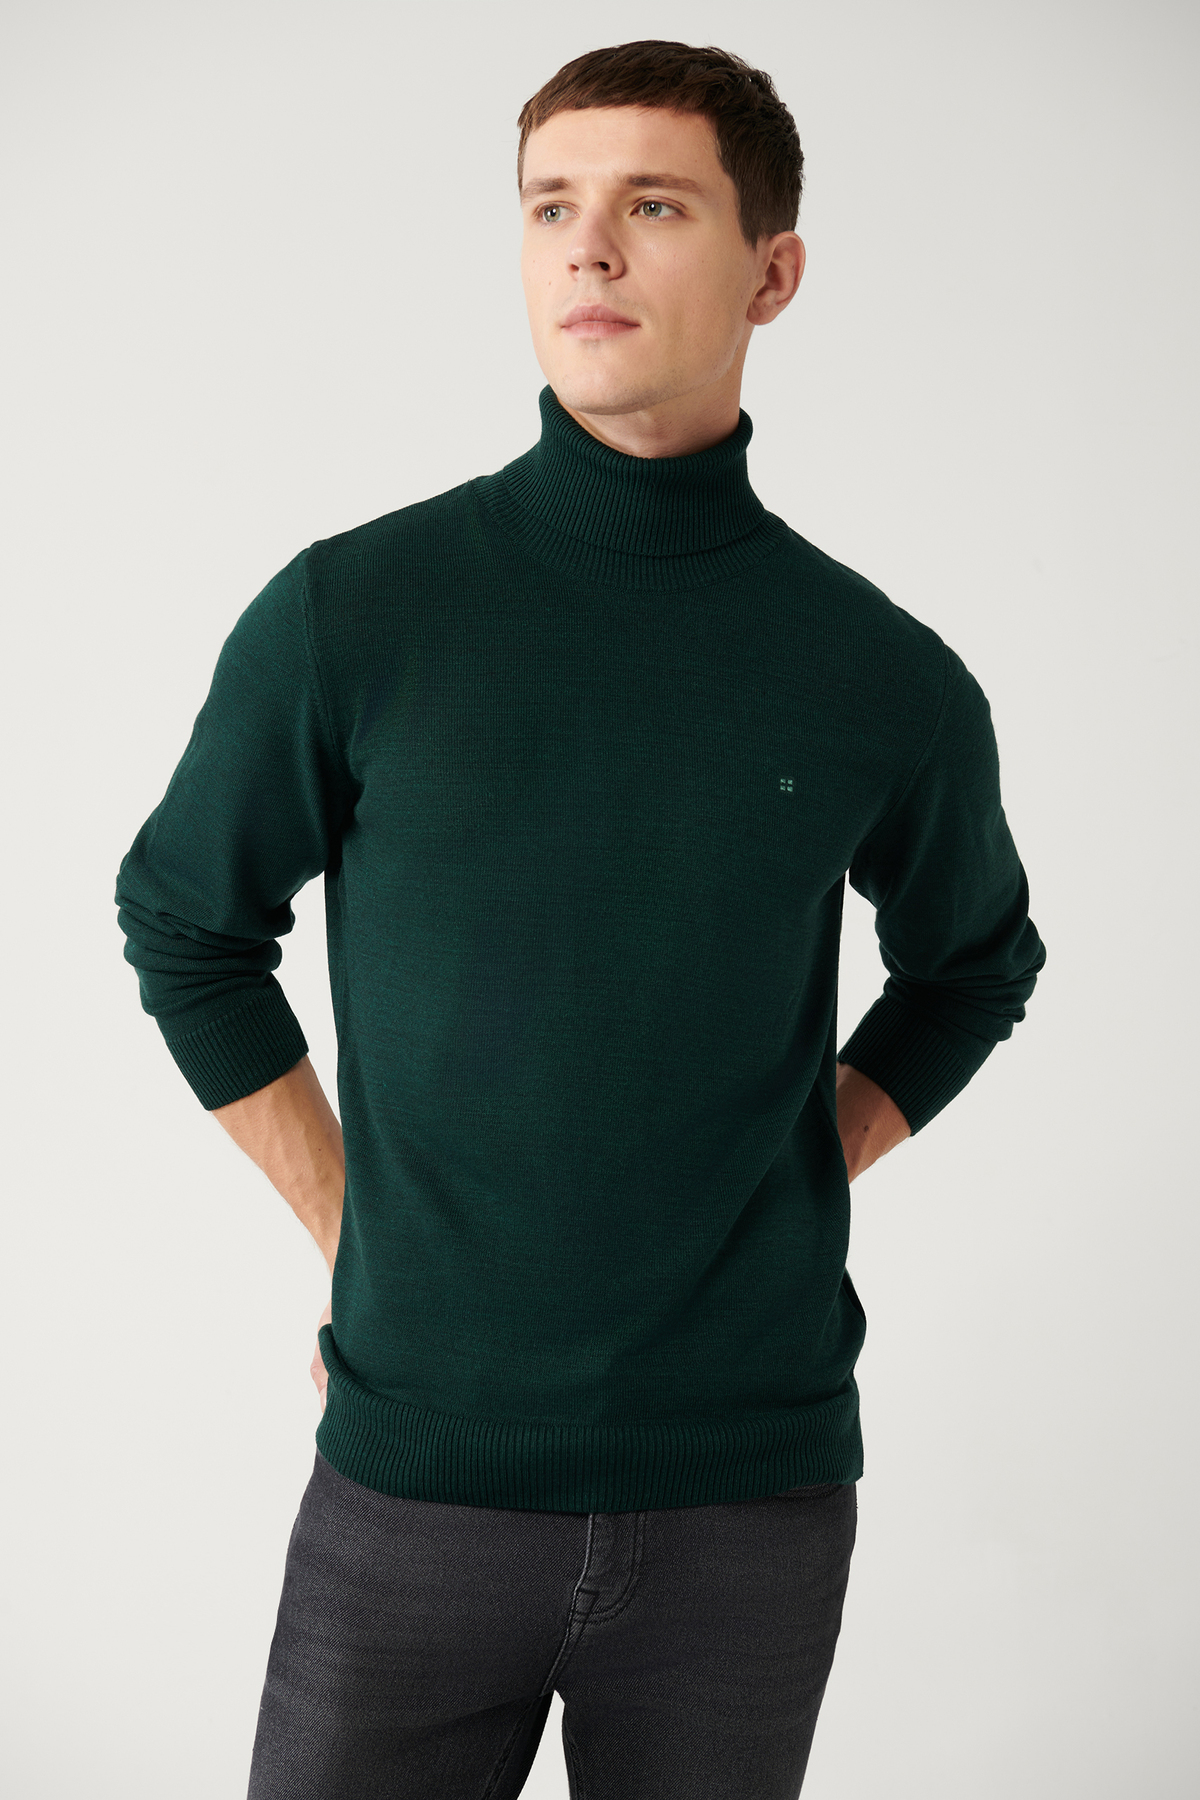 Levně Avva Green Unisex Knitwear Sweater Full Turtleneck Non Pilling Regular Fit